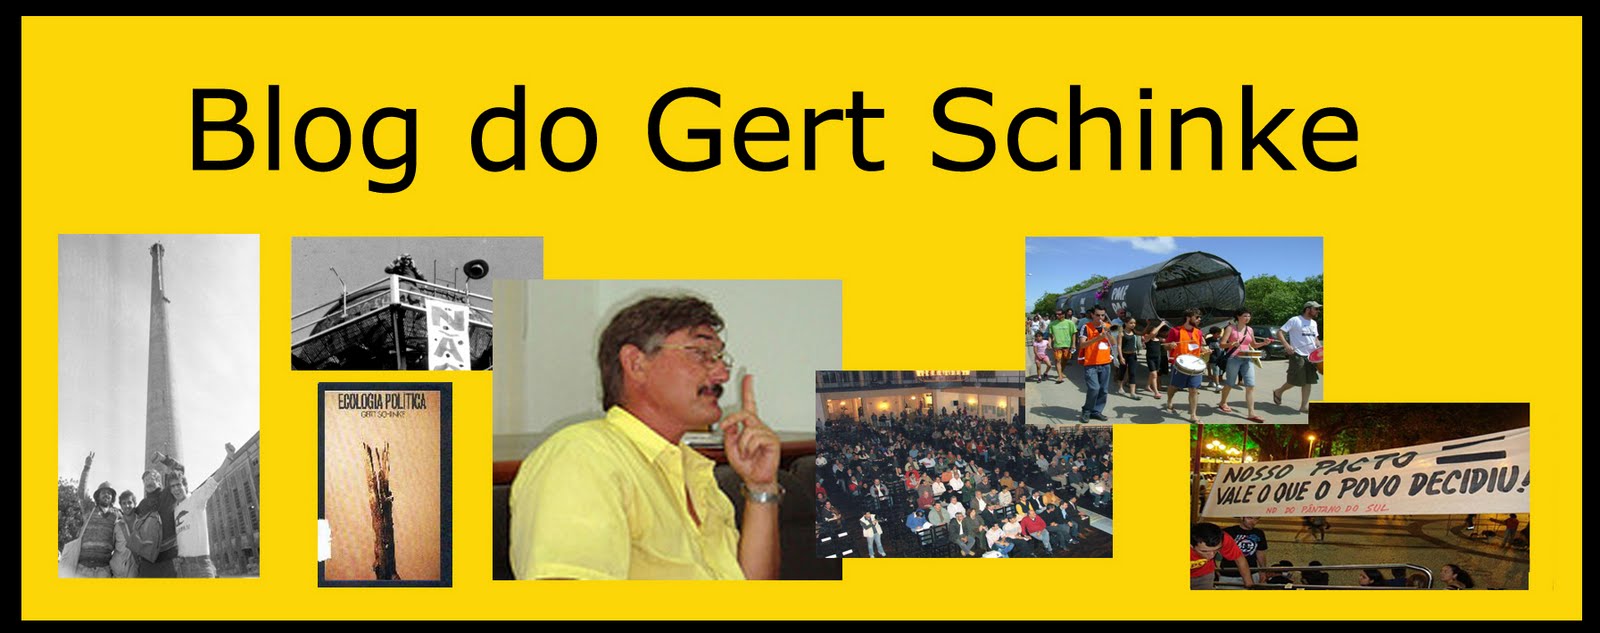 Blog do Gert Schinke